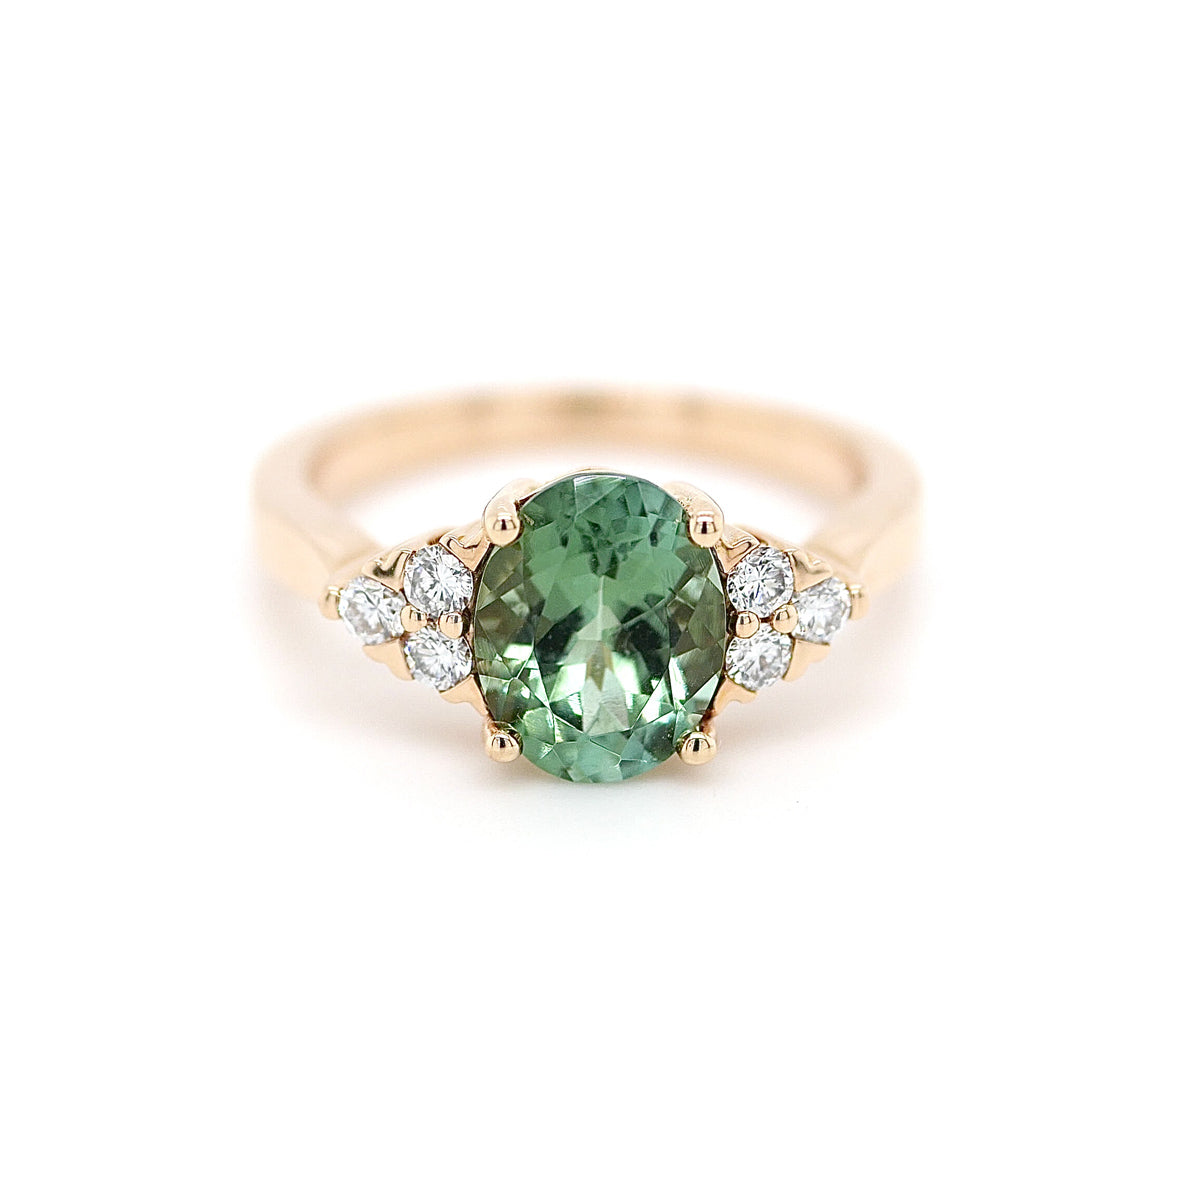 18ct Rose Gold 1.91ct Green Tourmaline & 0.21ct Diamond Ring - Size M